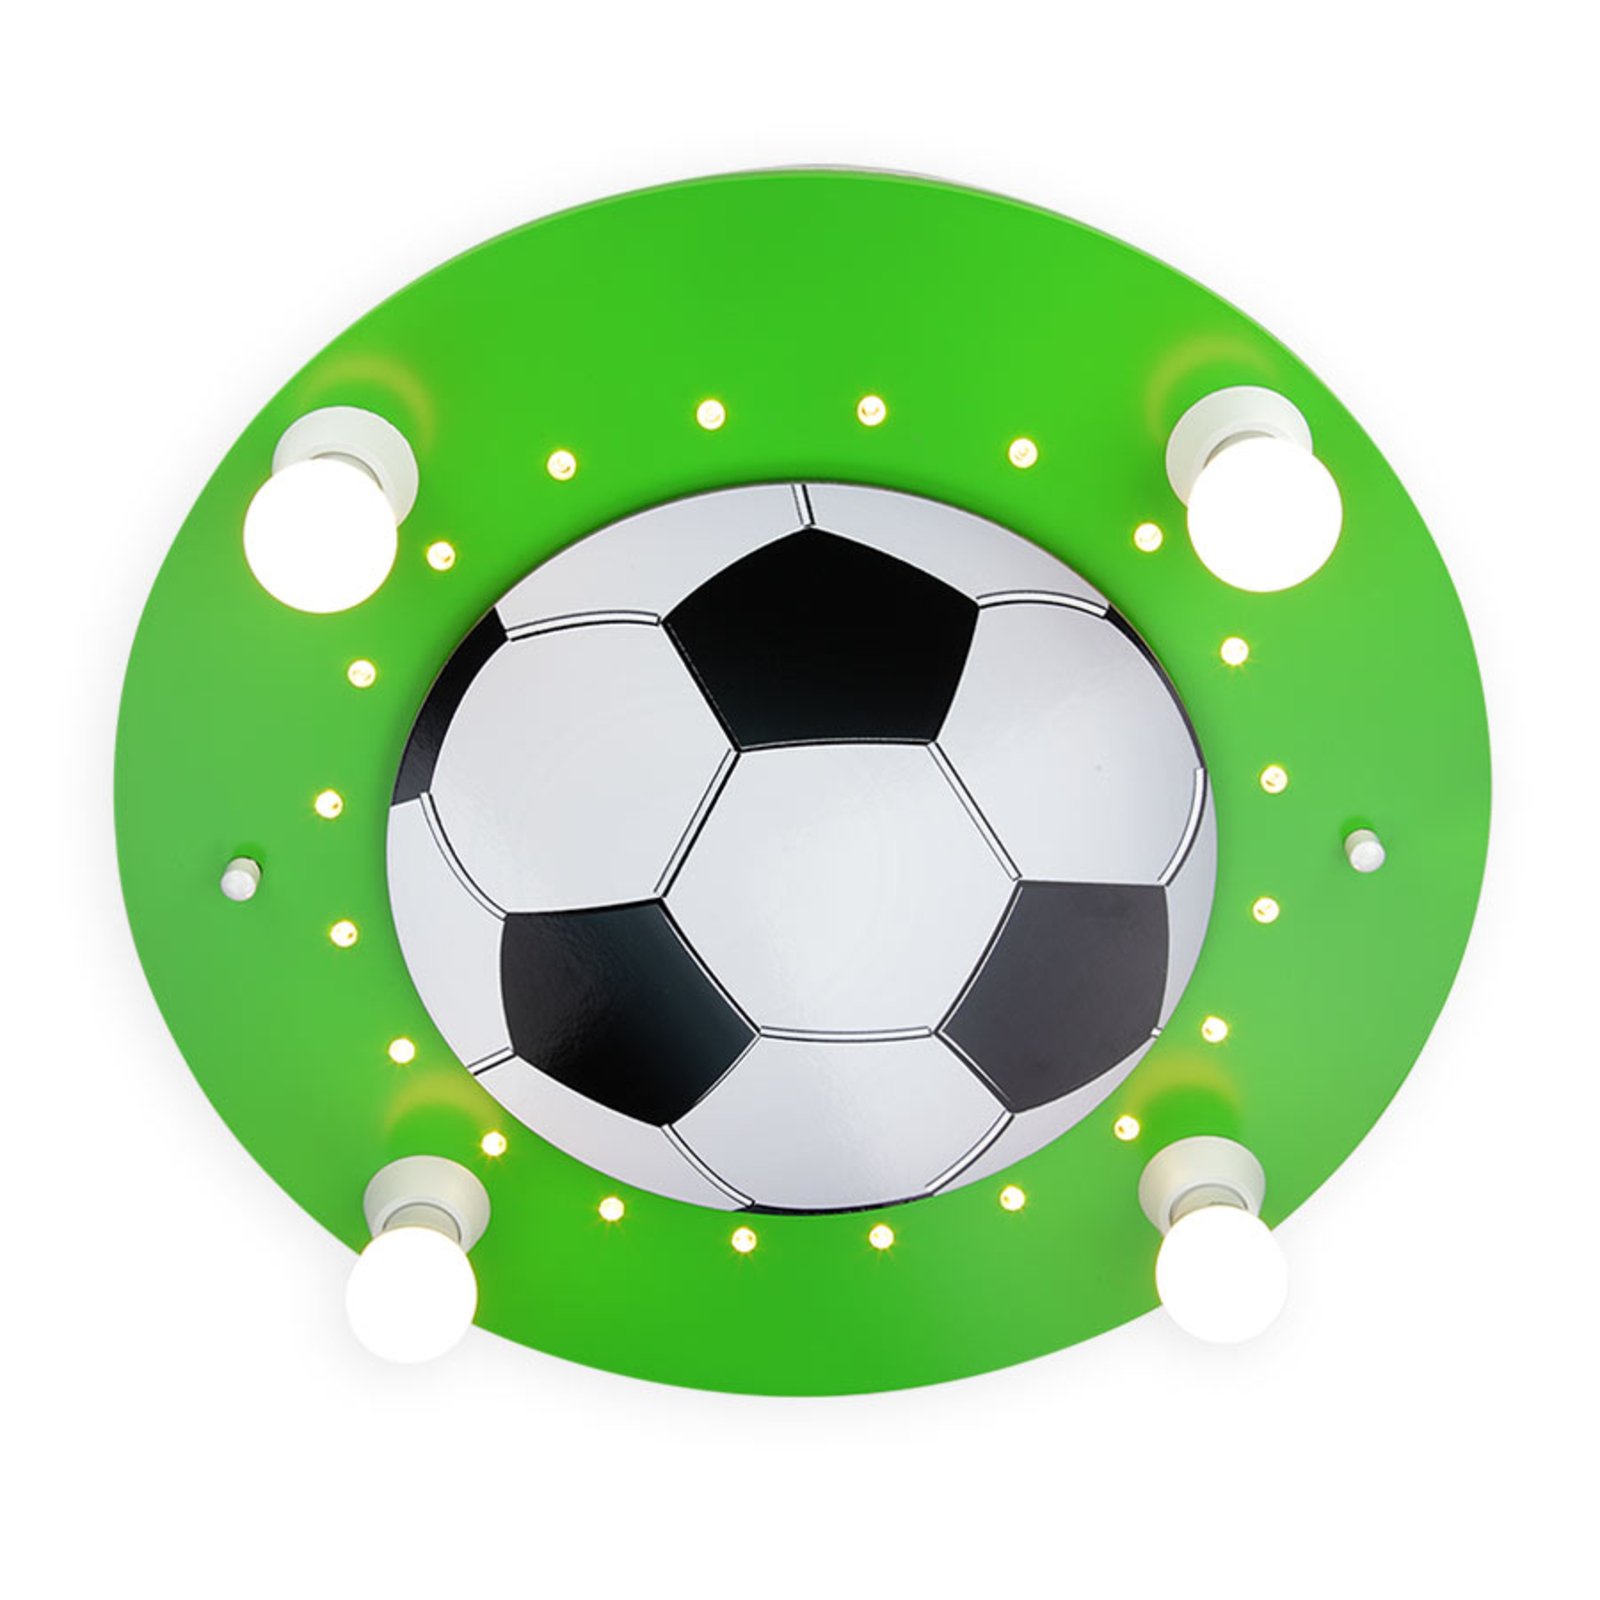 Plafón Fútbol, 4 luces verde oscuro-blanco